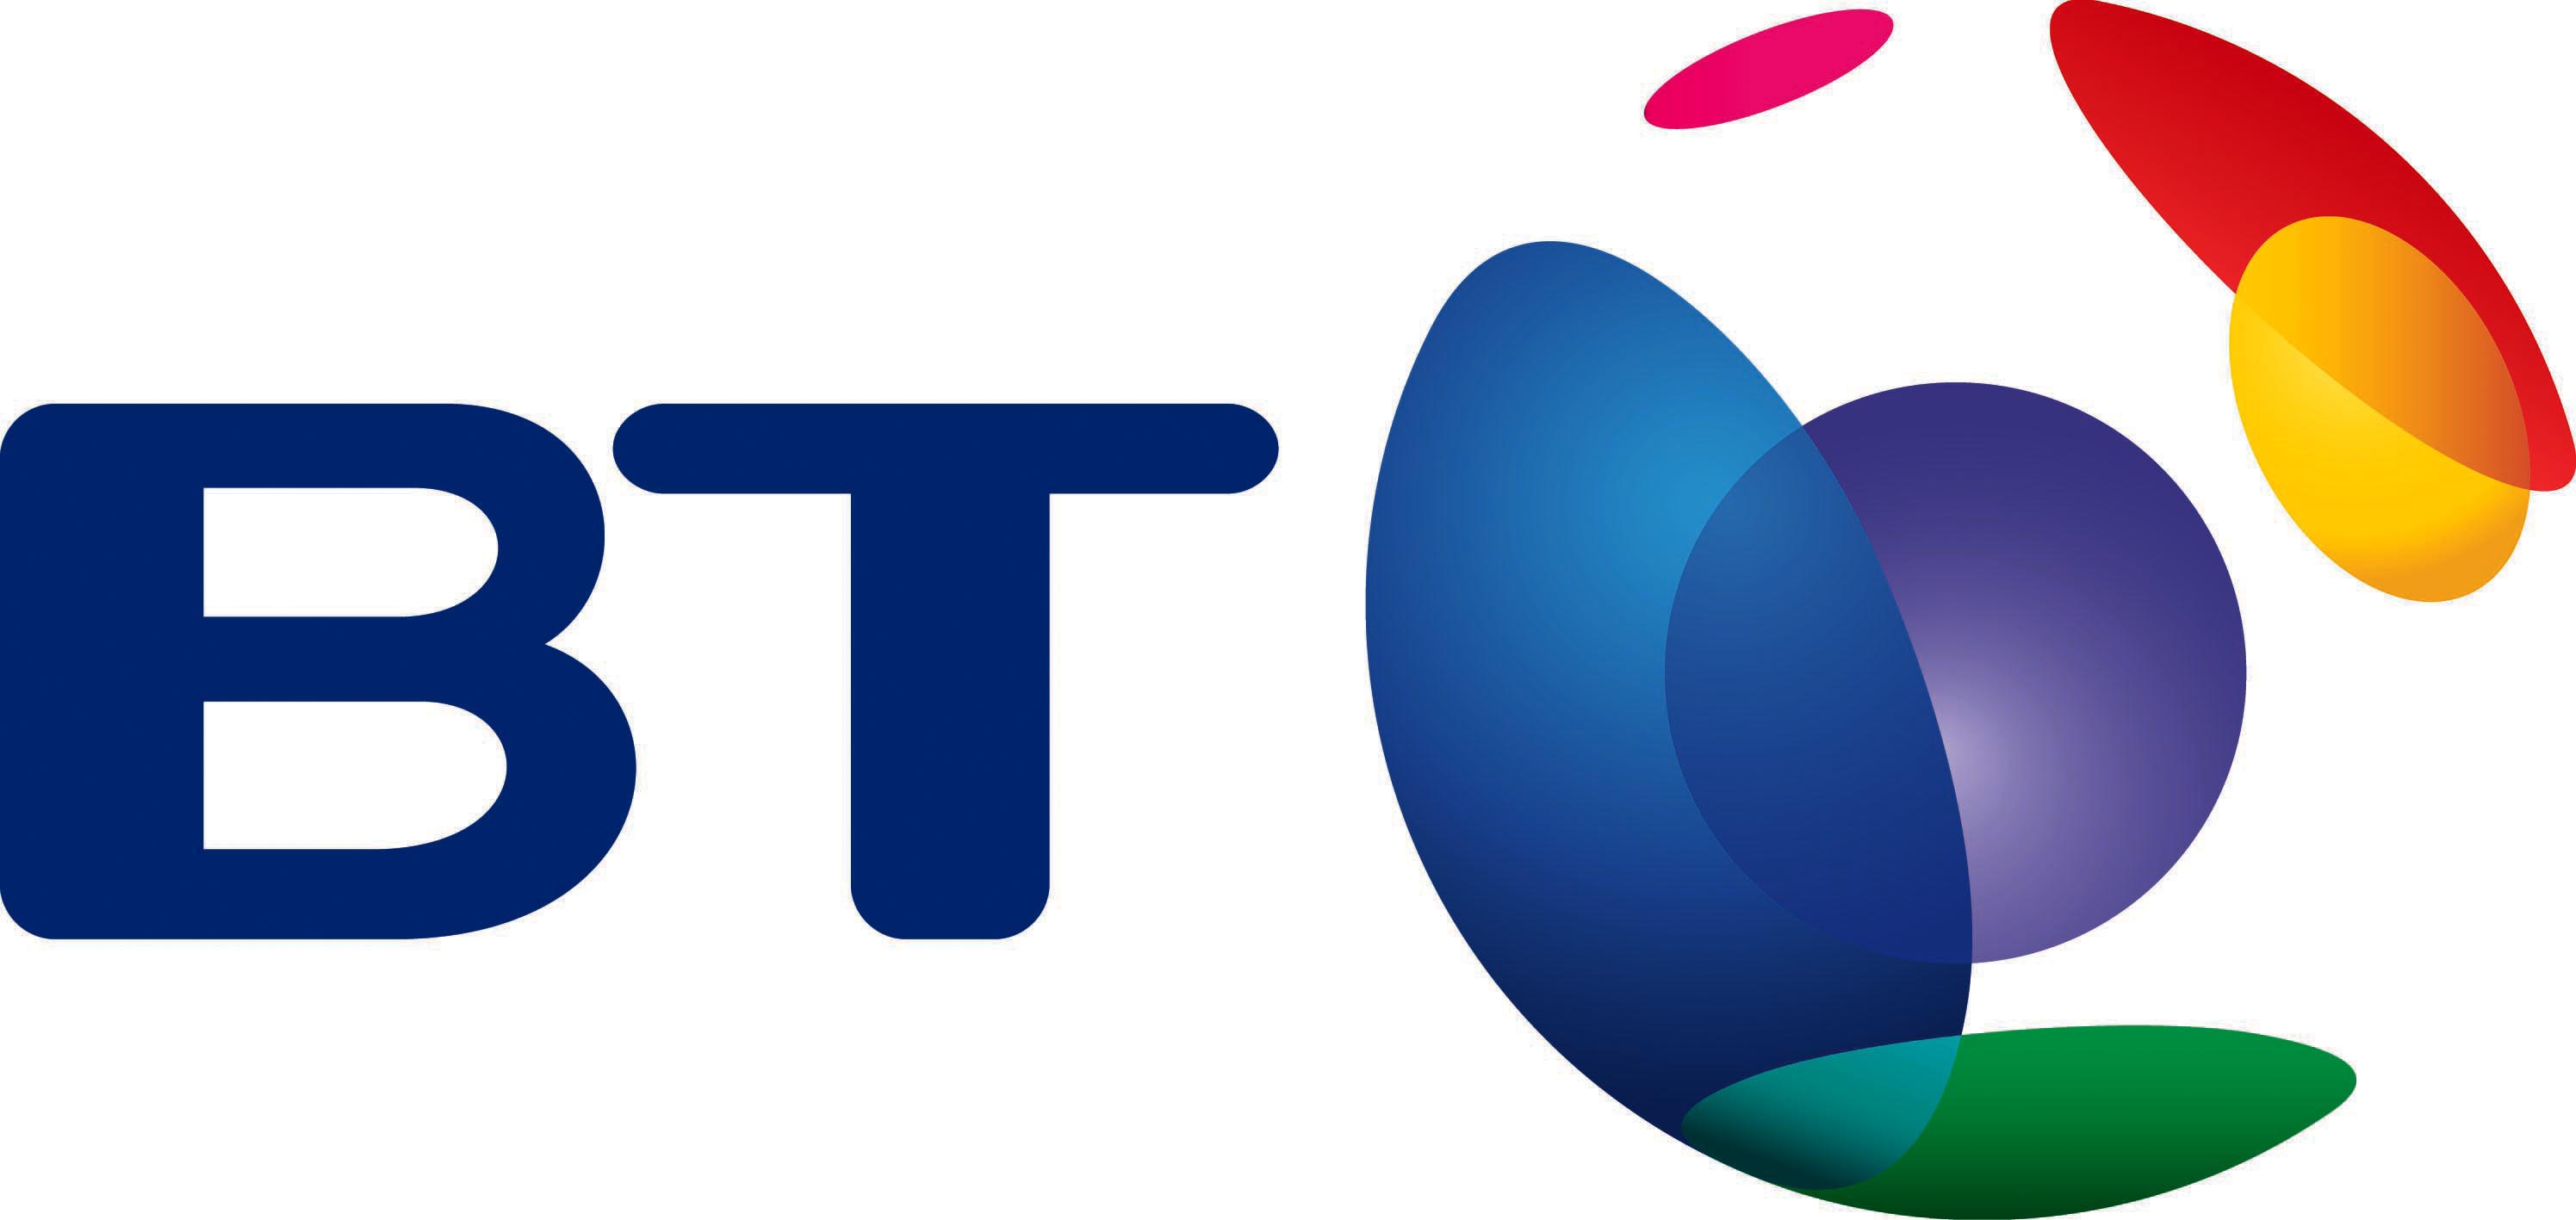 BT to go IPv6 across their consumer Internet services